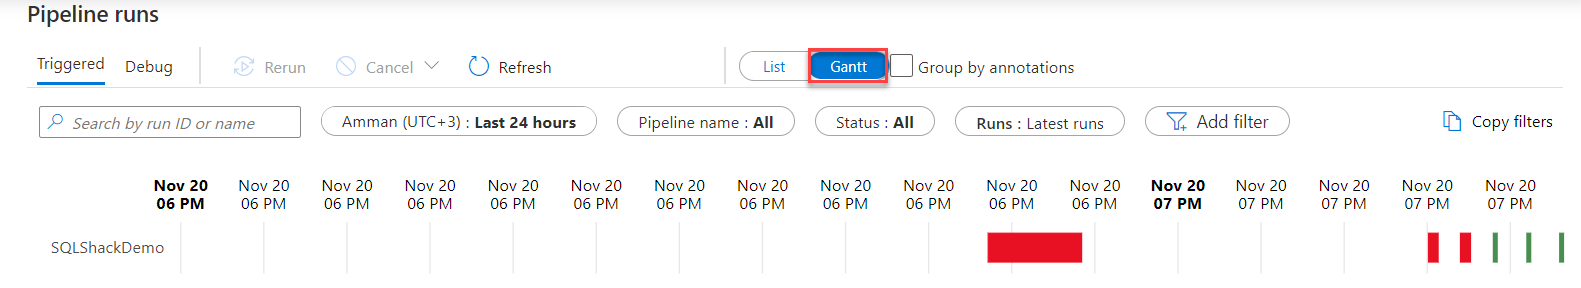 Gantt triggered pipeline run display